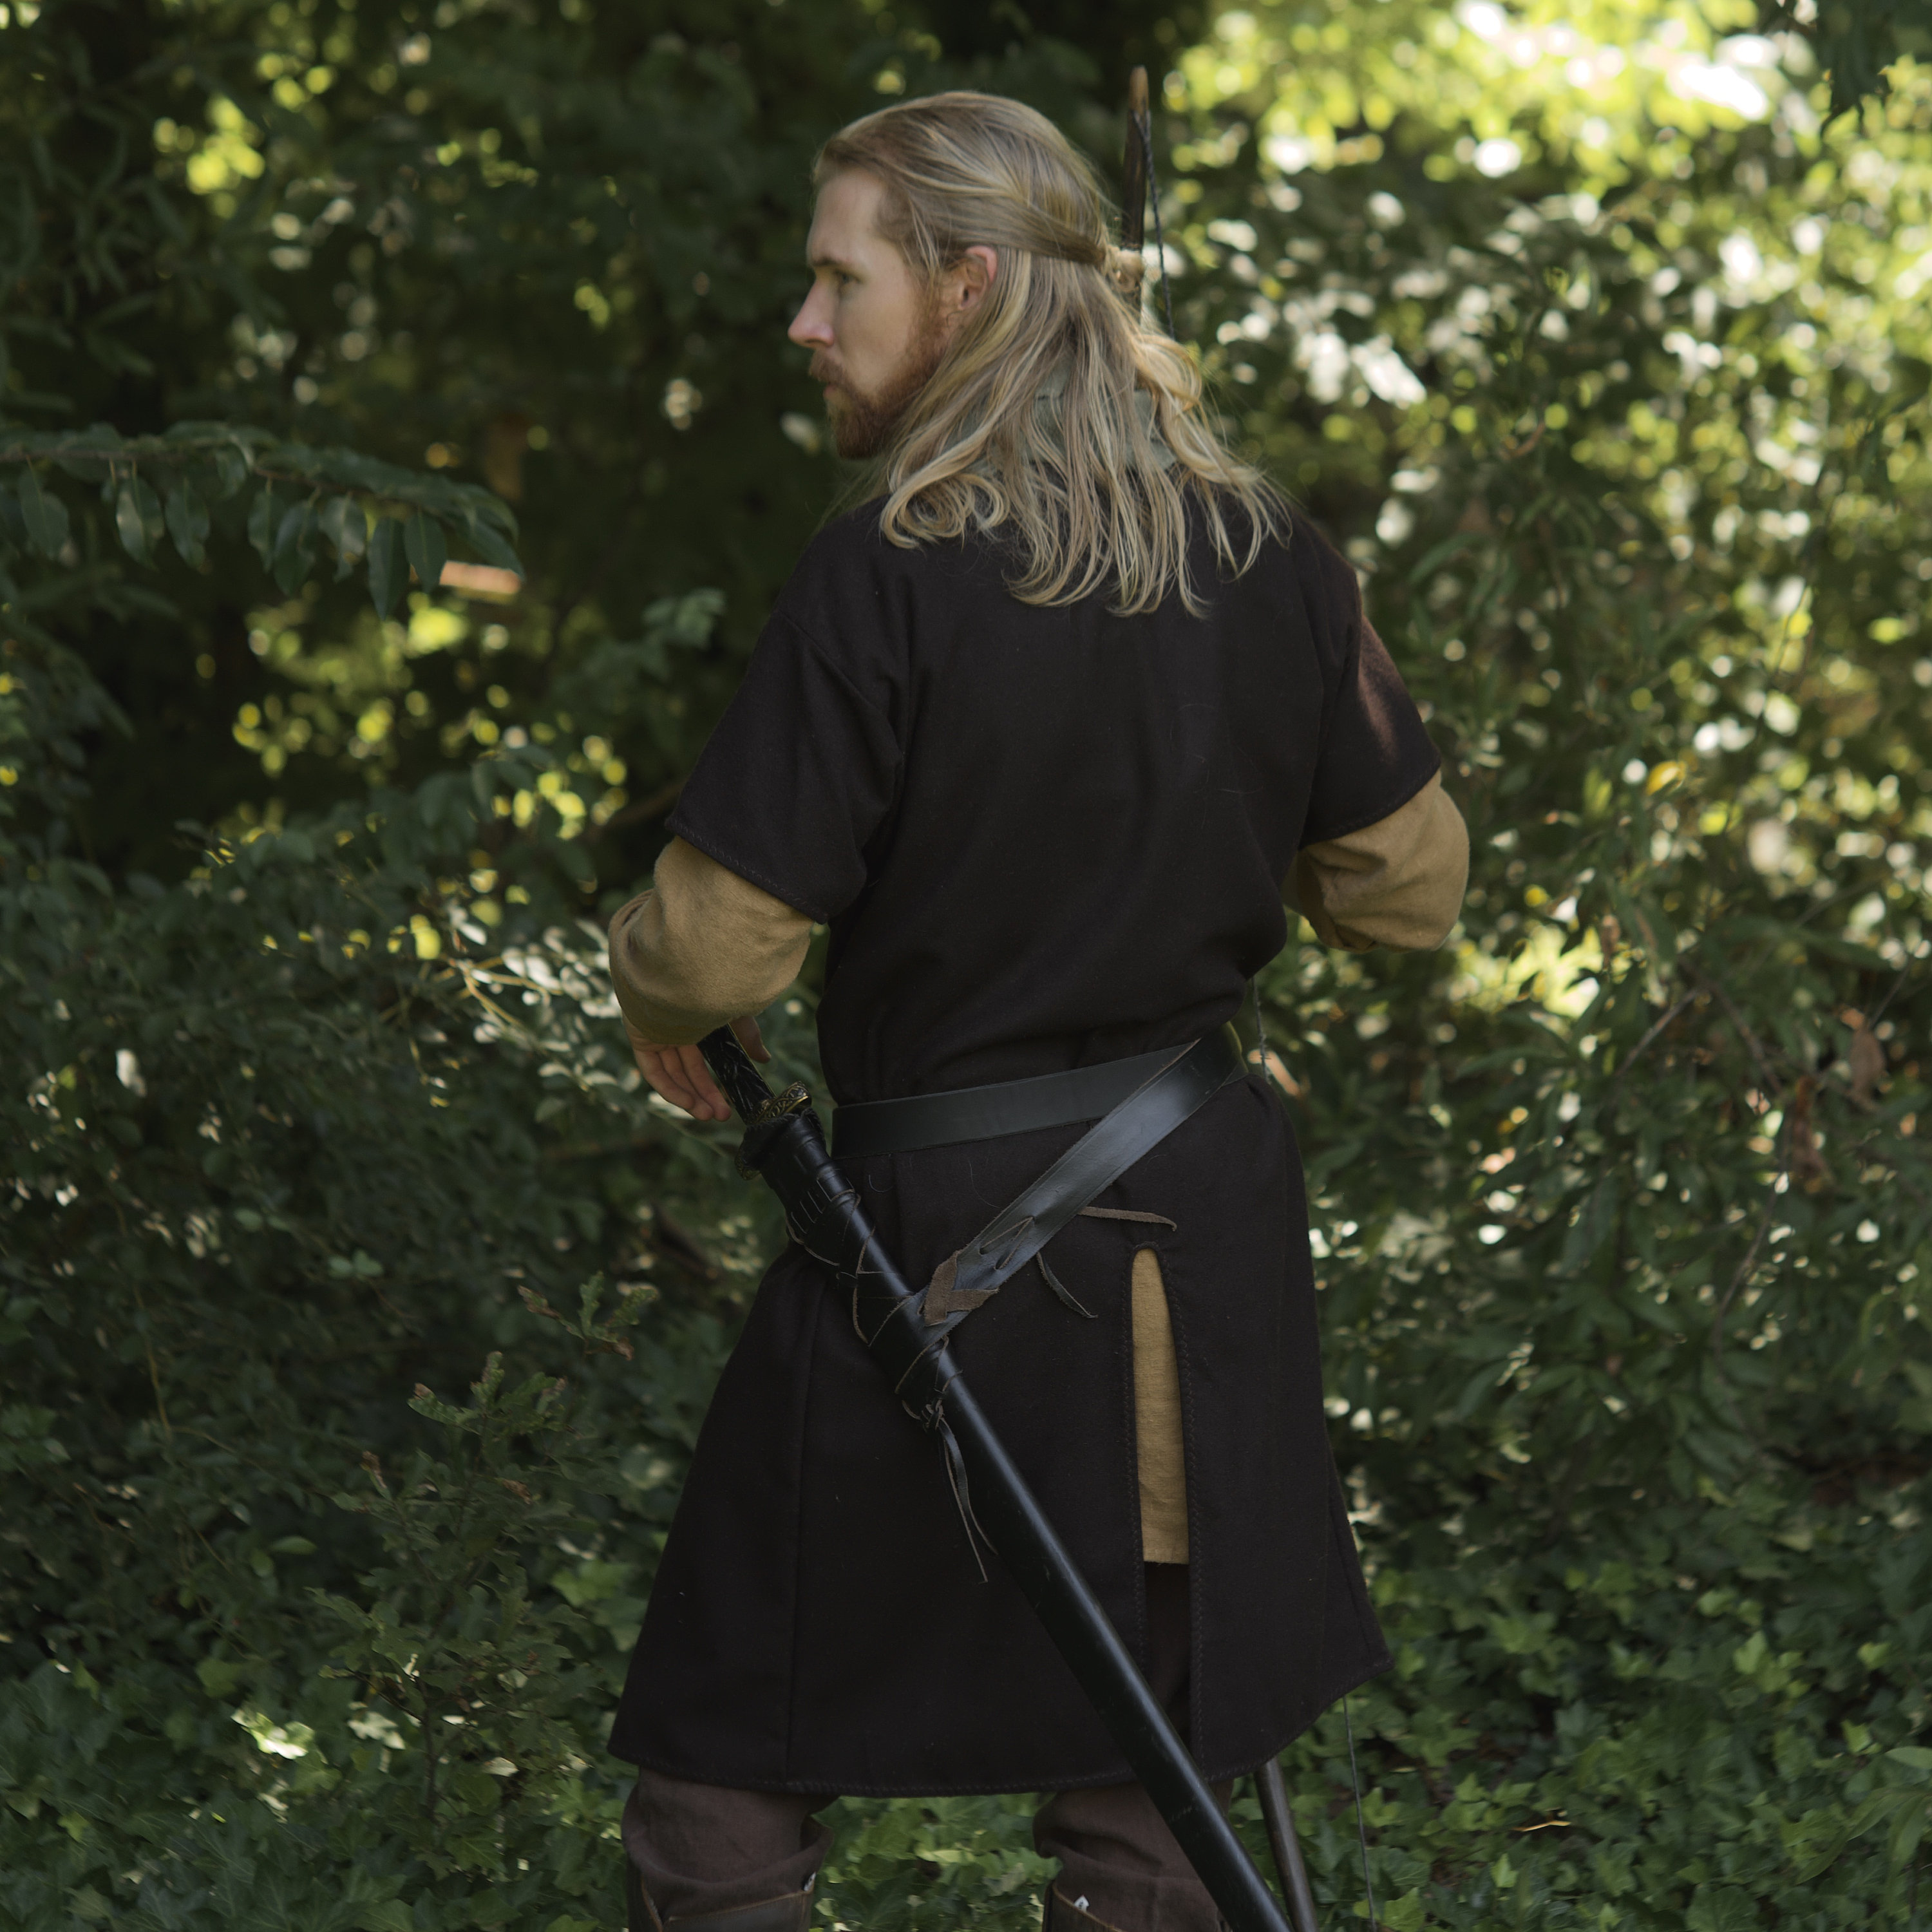 Wool Hunter's Coat - Medieval and Fantasy Coat - Brown Short Sleeved